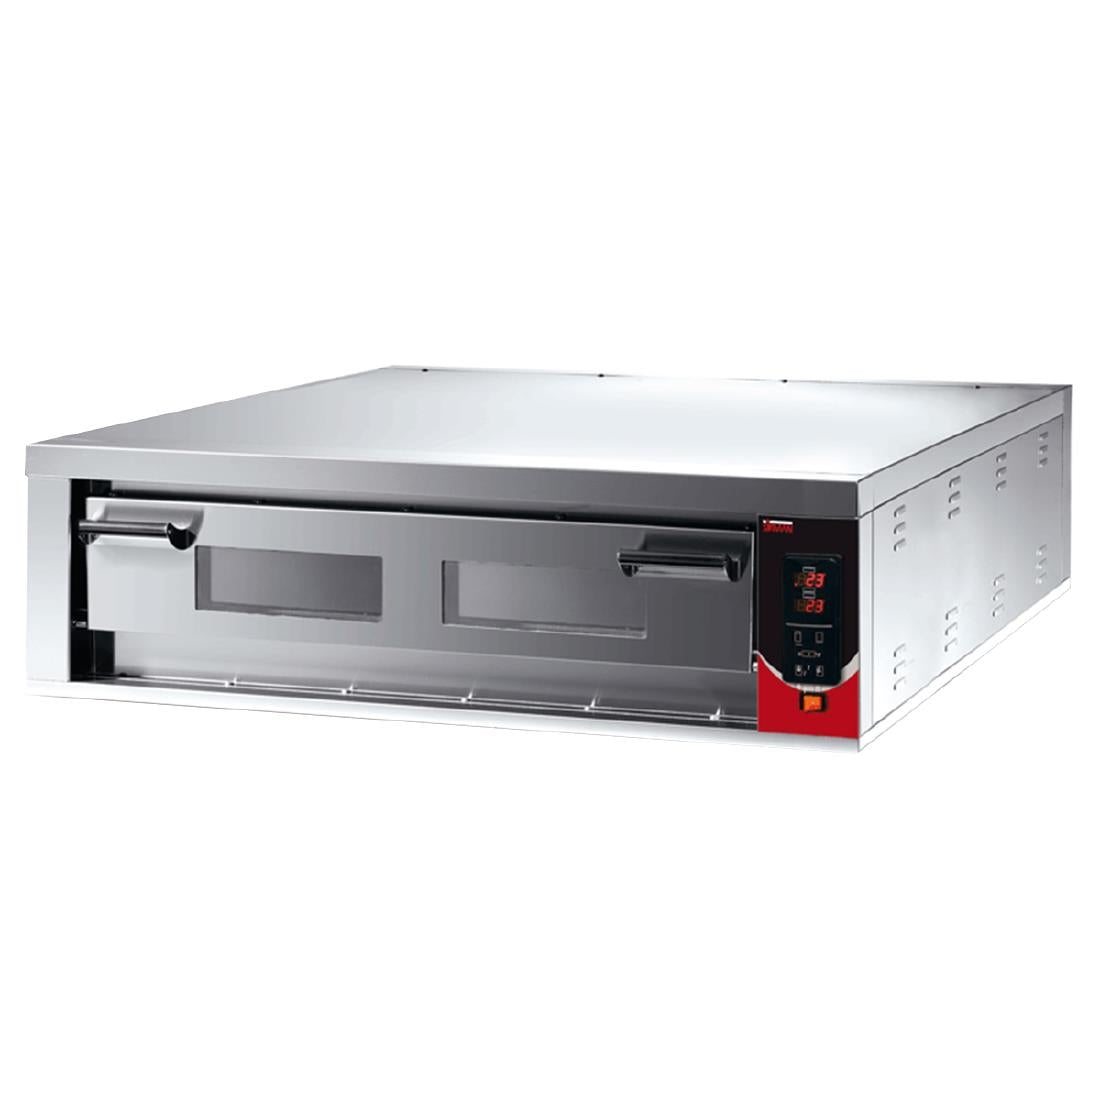 CU082 Sirman Vesuvio 105x70 Single Deck Pizza Oven JD Catering Equipment Solutions Ltd